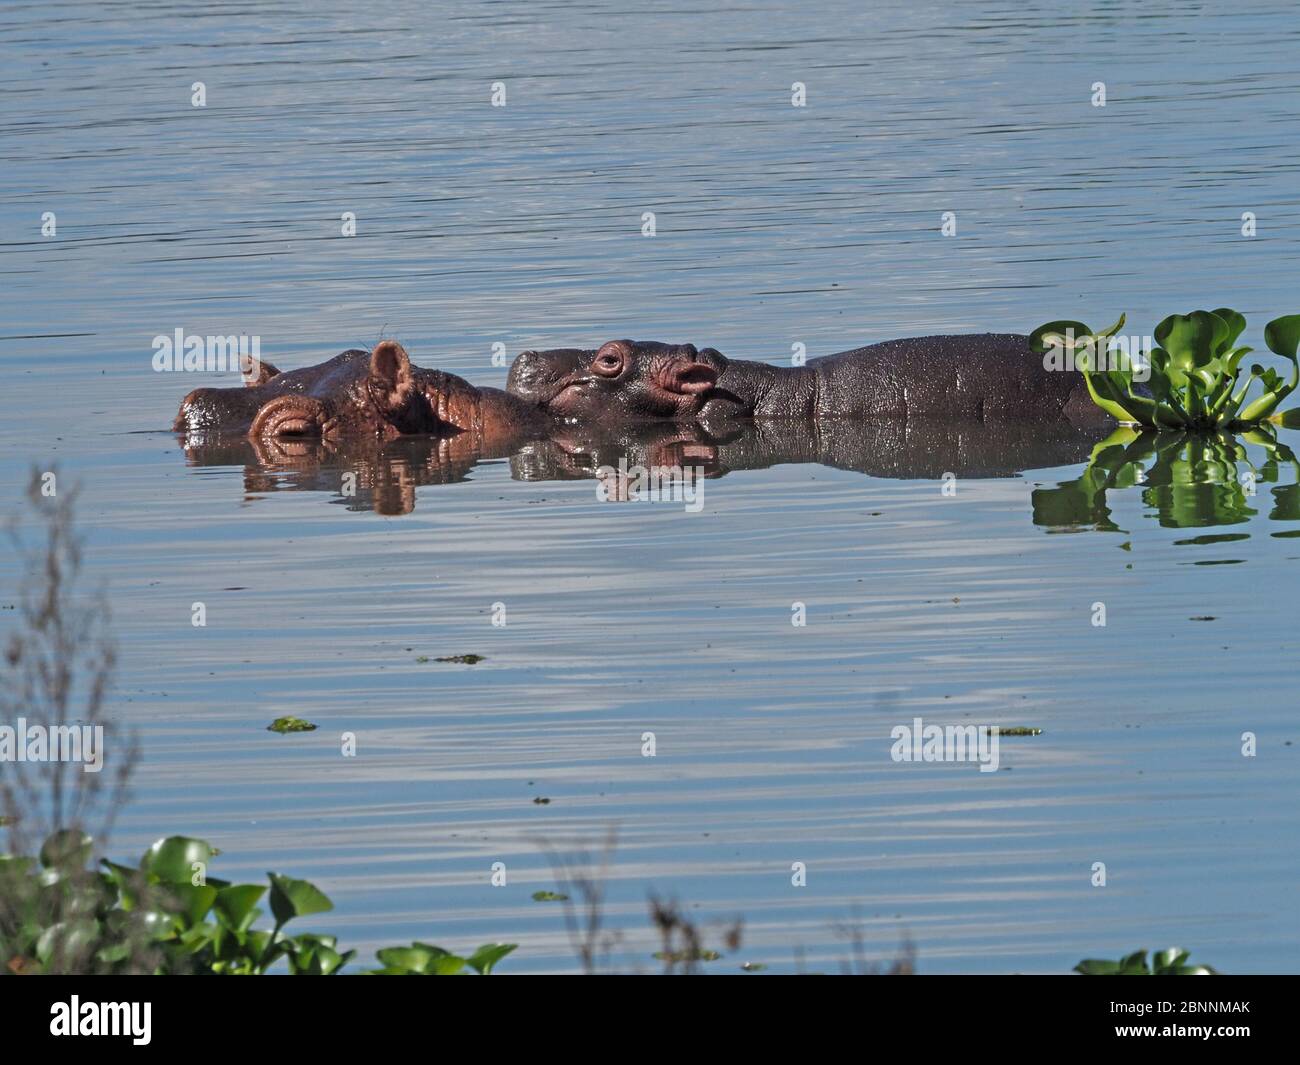 mother common hippopotamus (Hippopotamus amphibius) with her cute baby on her back in the tropical waters of Lake Naivasha, Rift Valley Kenya, Africa Stock Photo